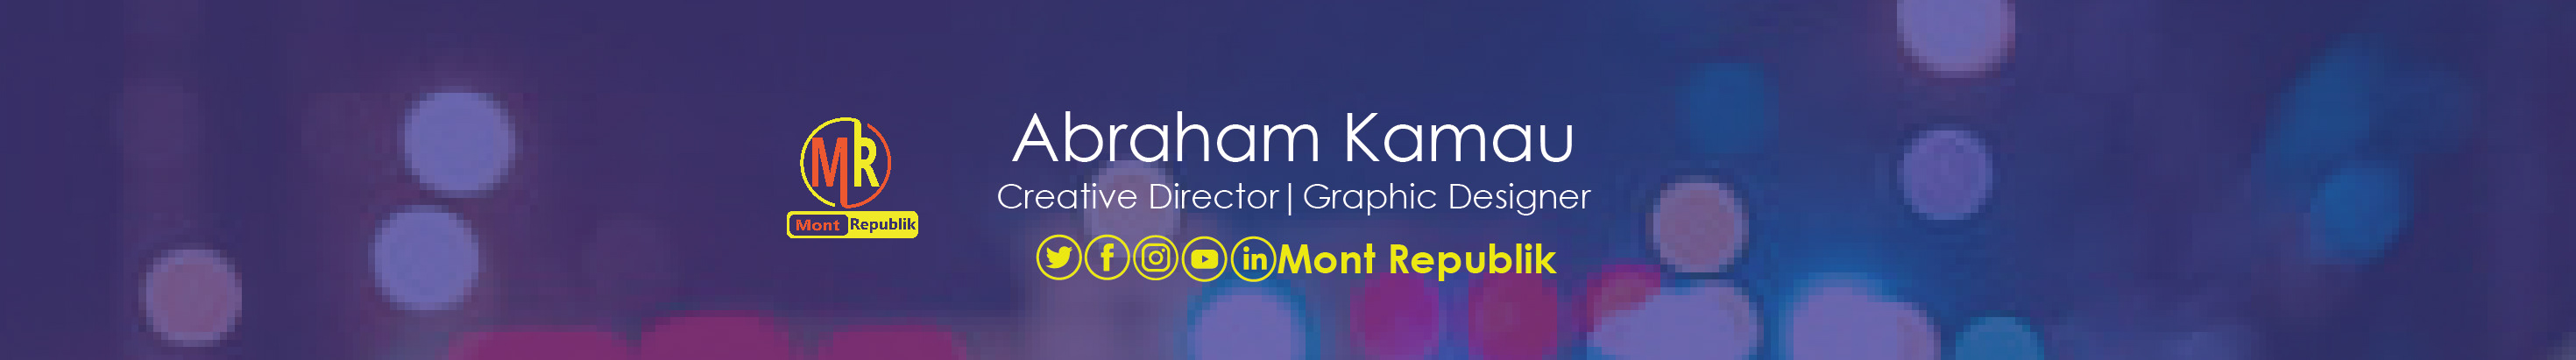 Abraham Kamau's profile banner